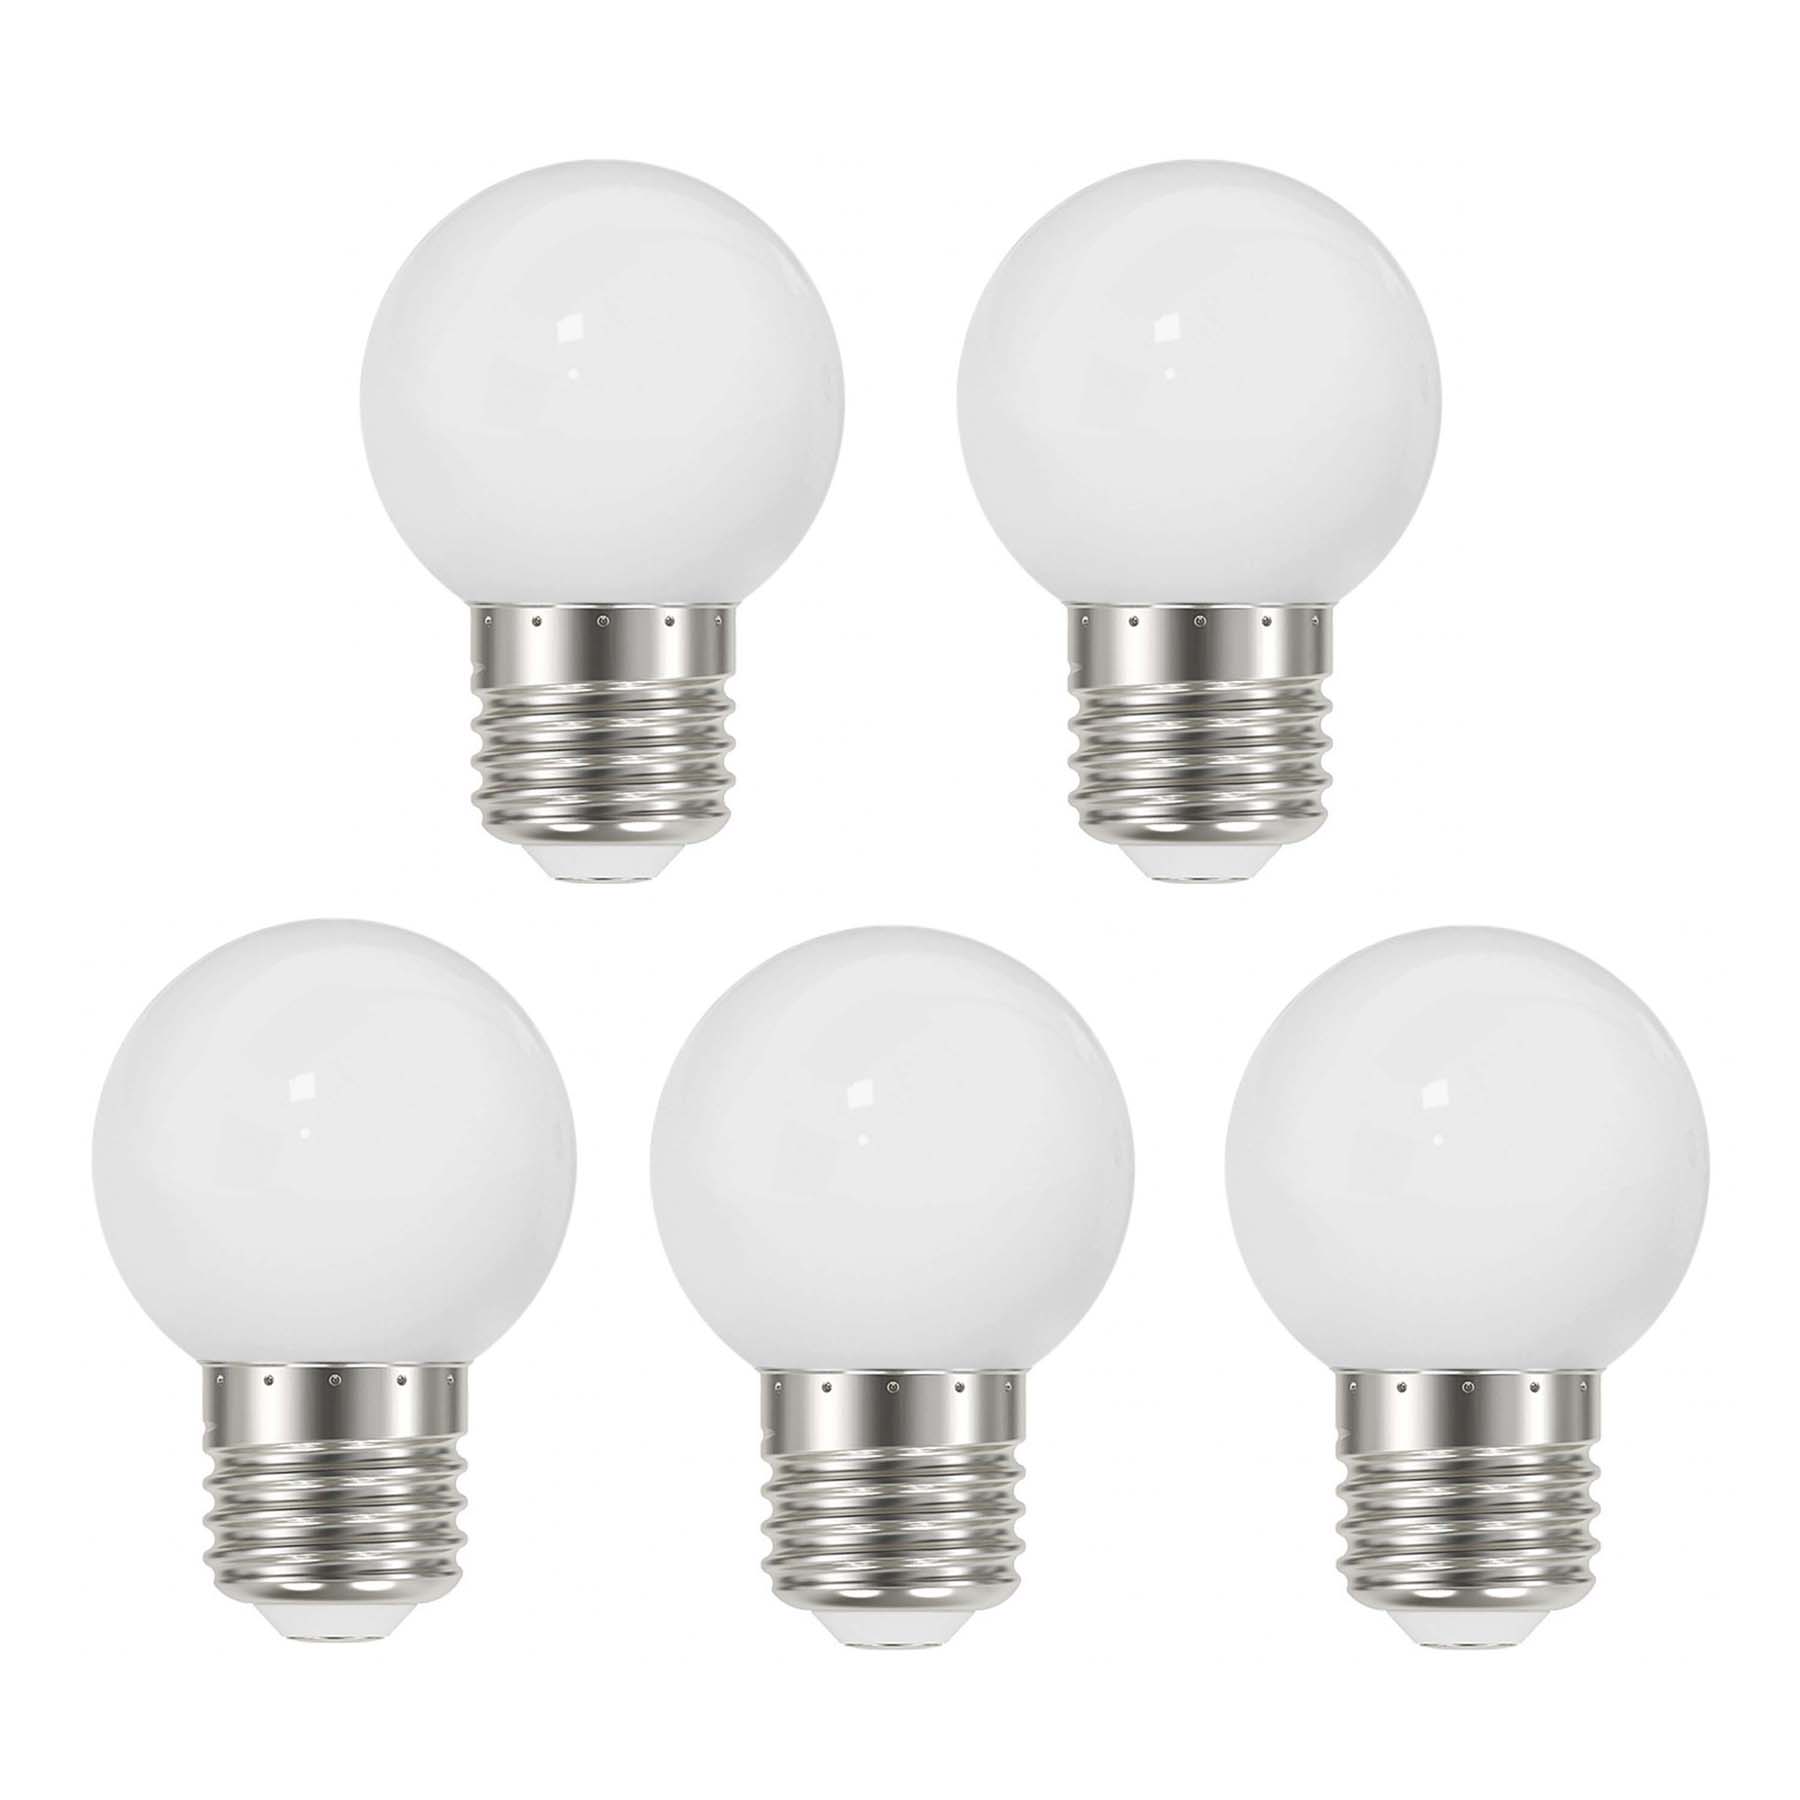 G.W.S LED Wholesale LED Bulbs 3W / Warm White (3000K) / 5 3W E27 Bayonet Festoon LED Coloured Bulb Warm White